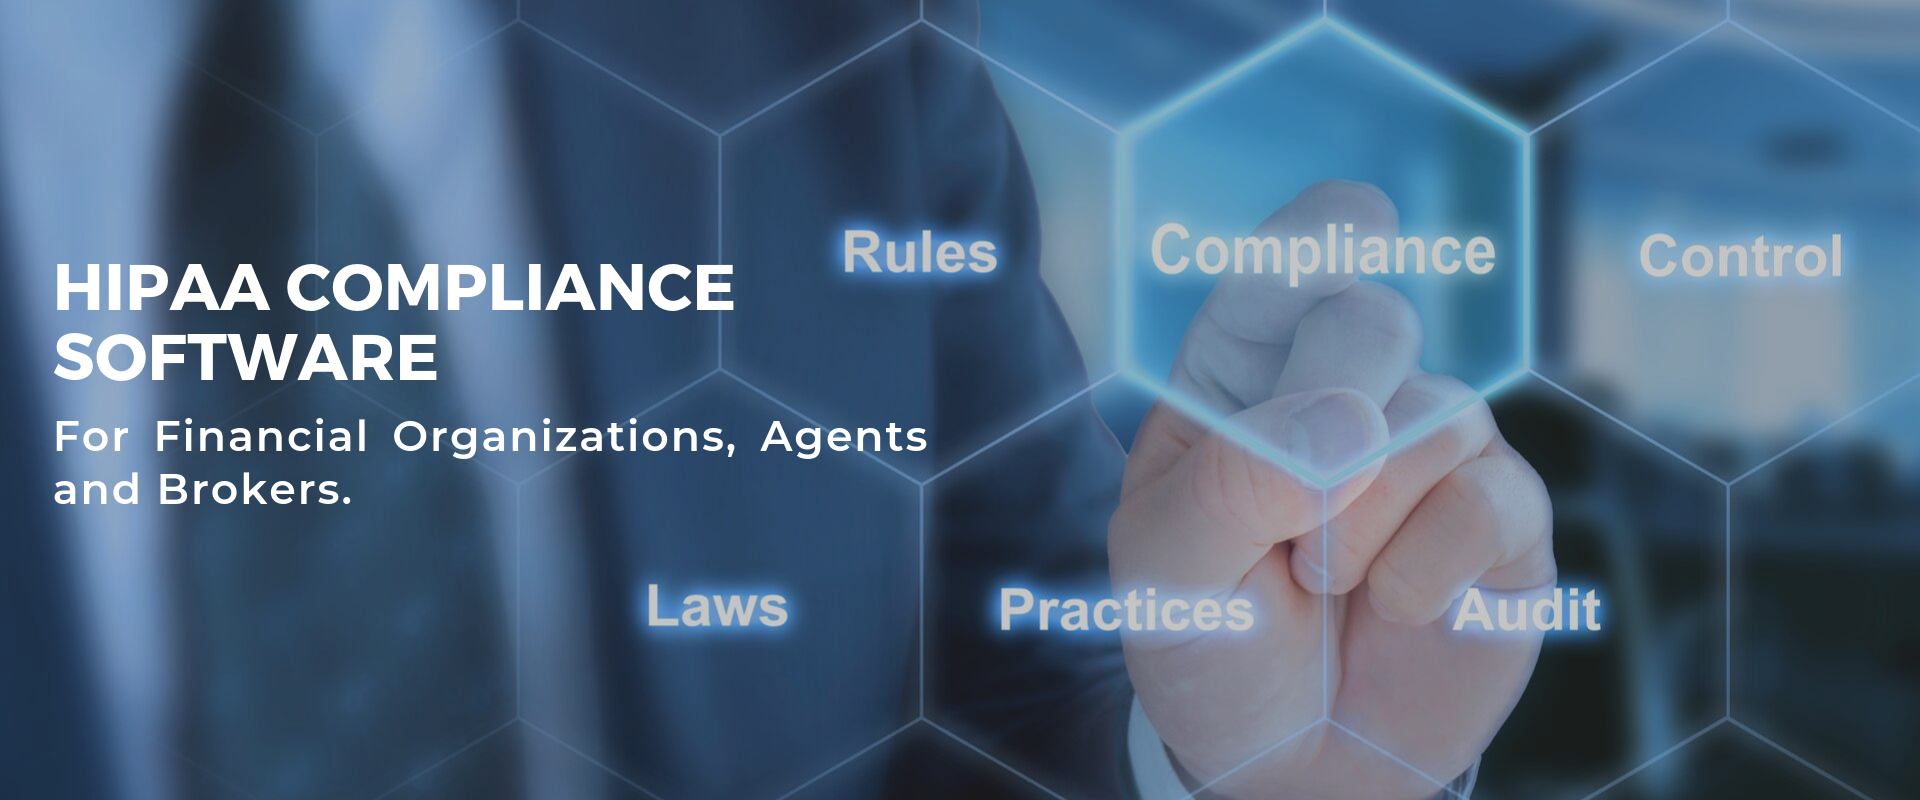 HIPAA compliance software